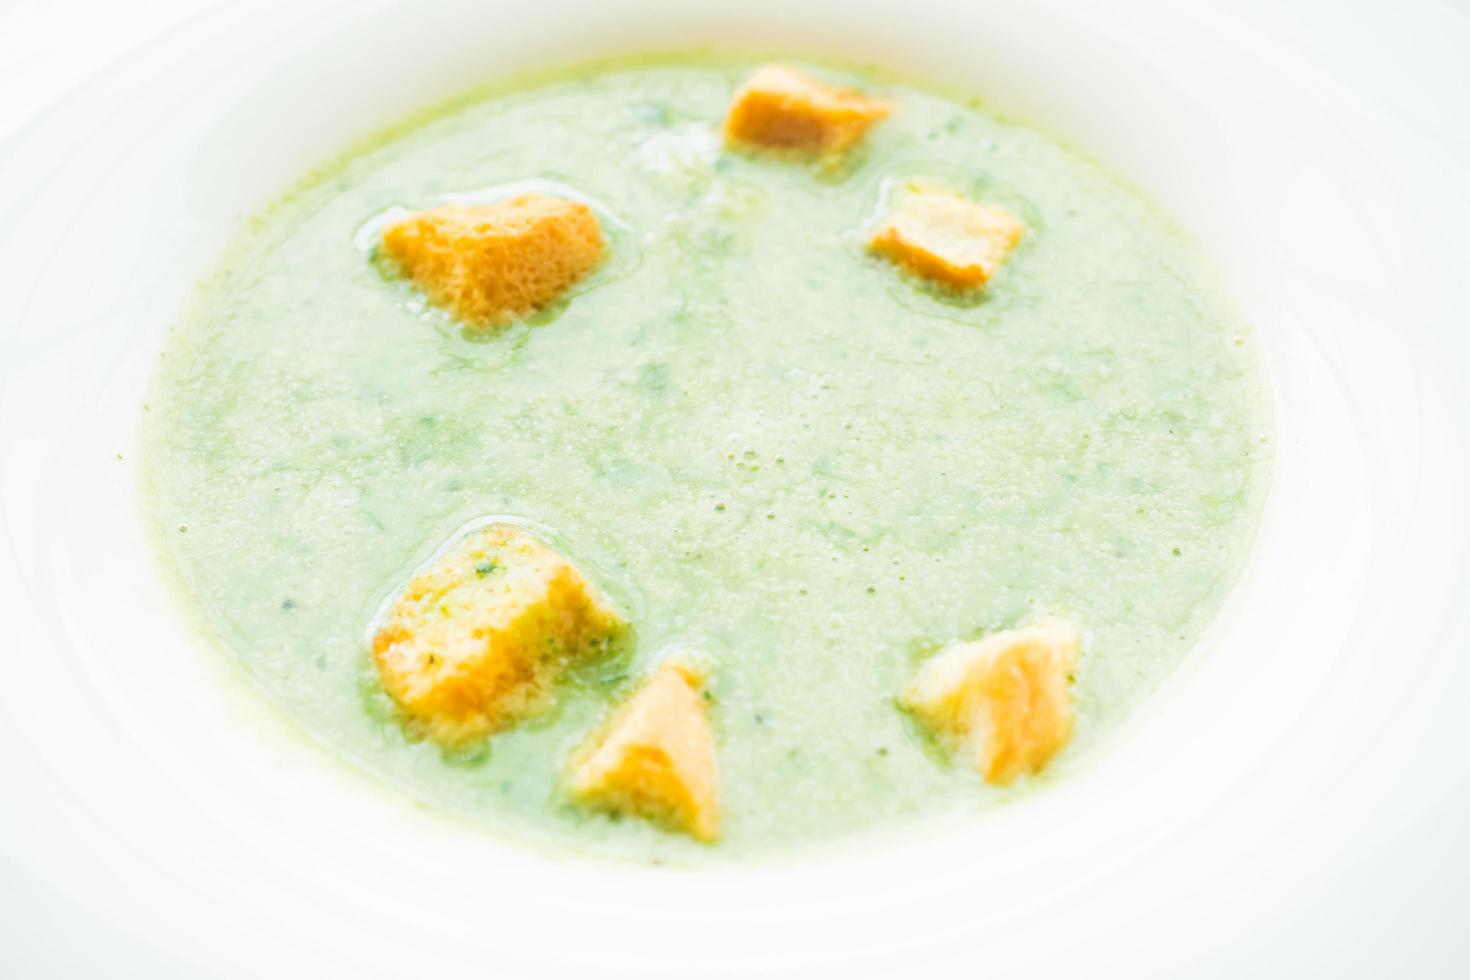 Green spinach cream soup photo